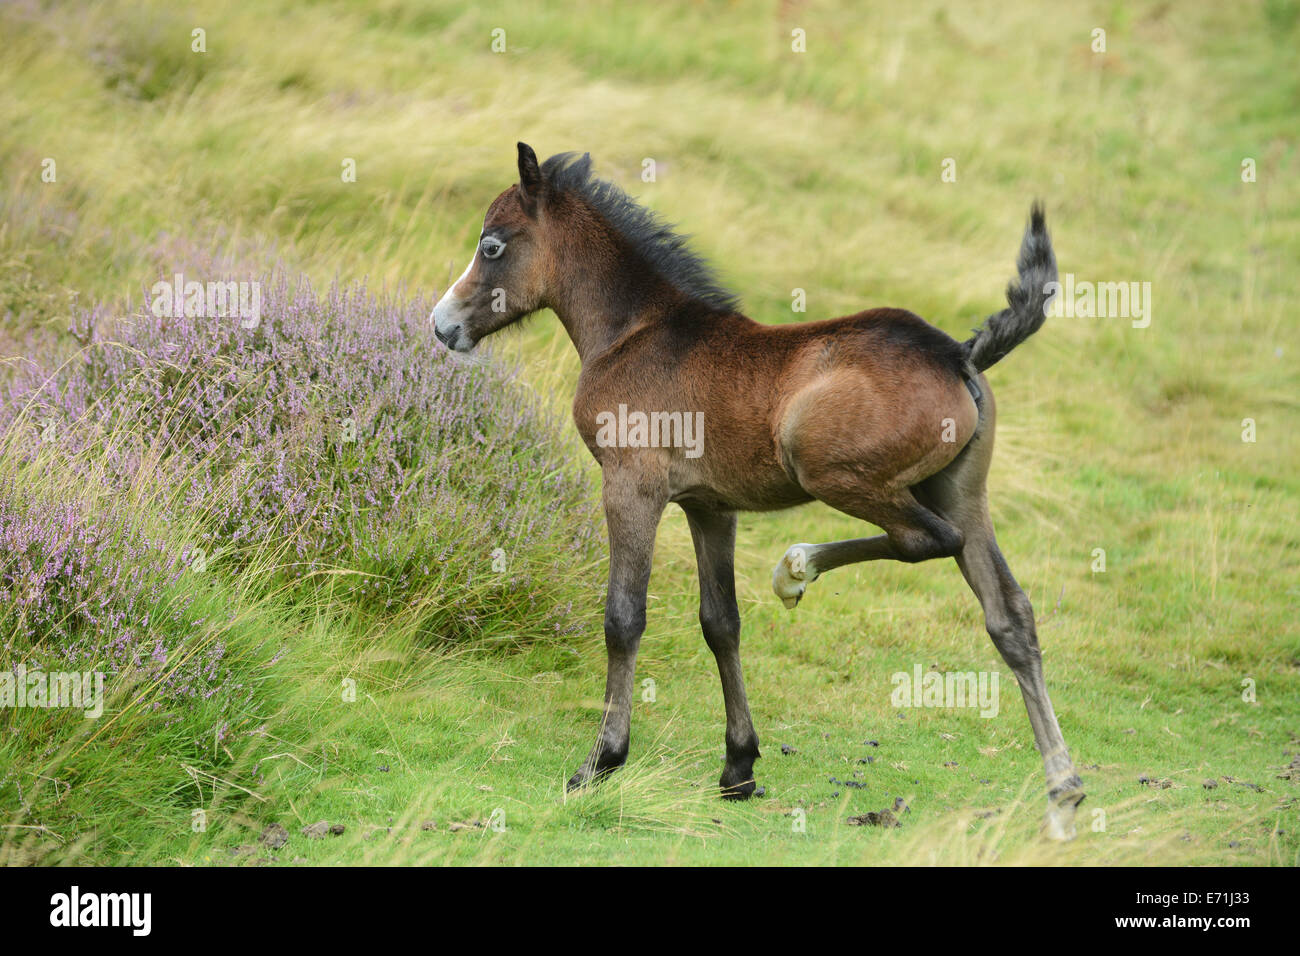 Wild pony ponies foal cute animal Long Mynd Shropshire british wildlife britain Uk Stock Photo